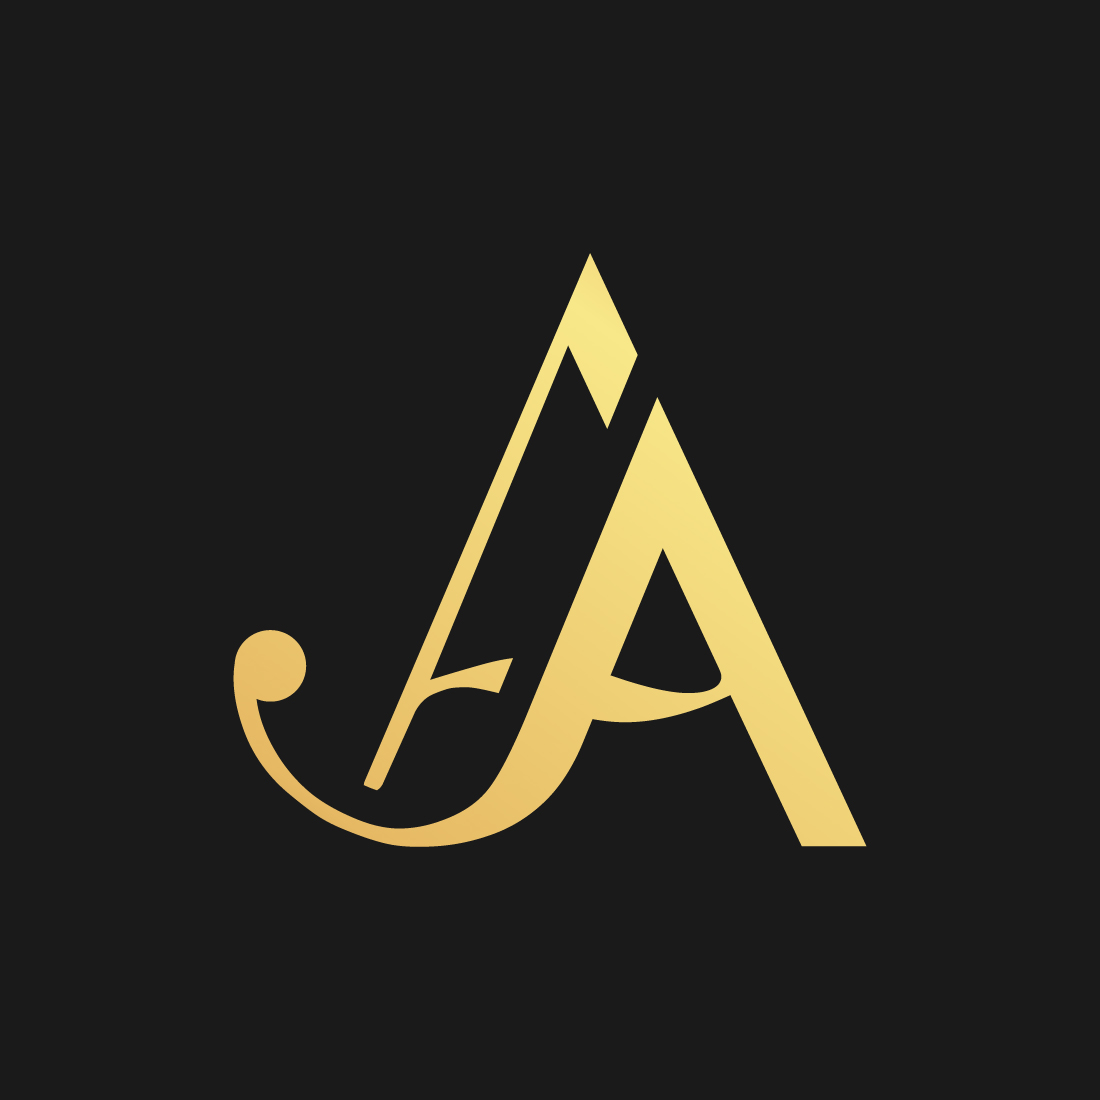 AJ luxury logo design preview image.